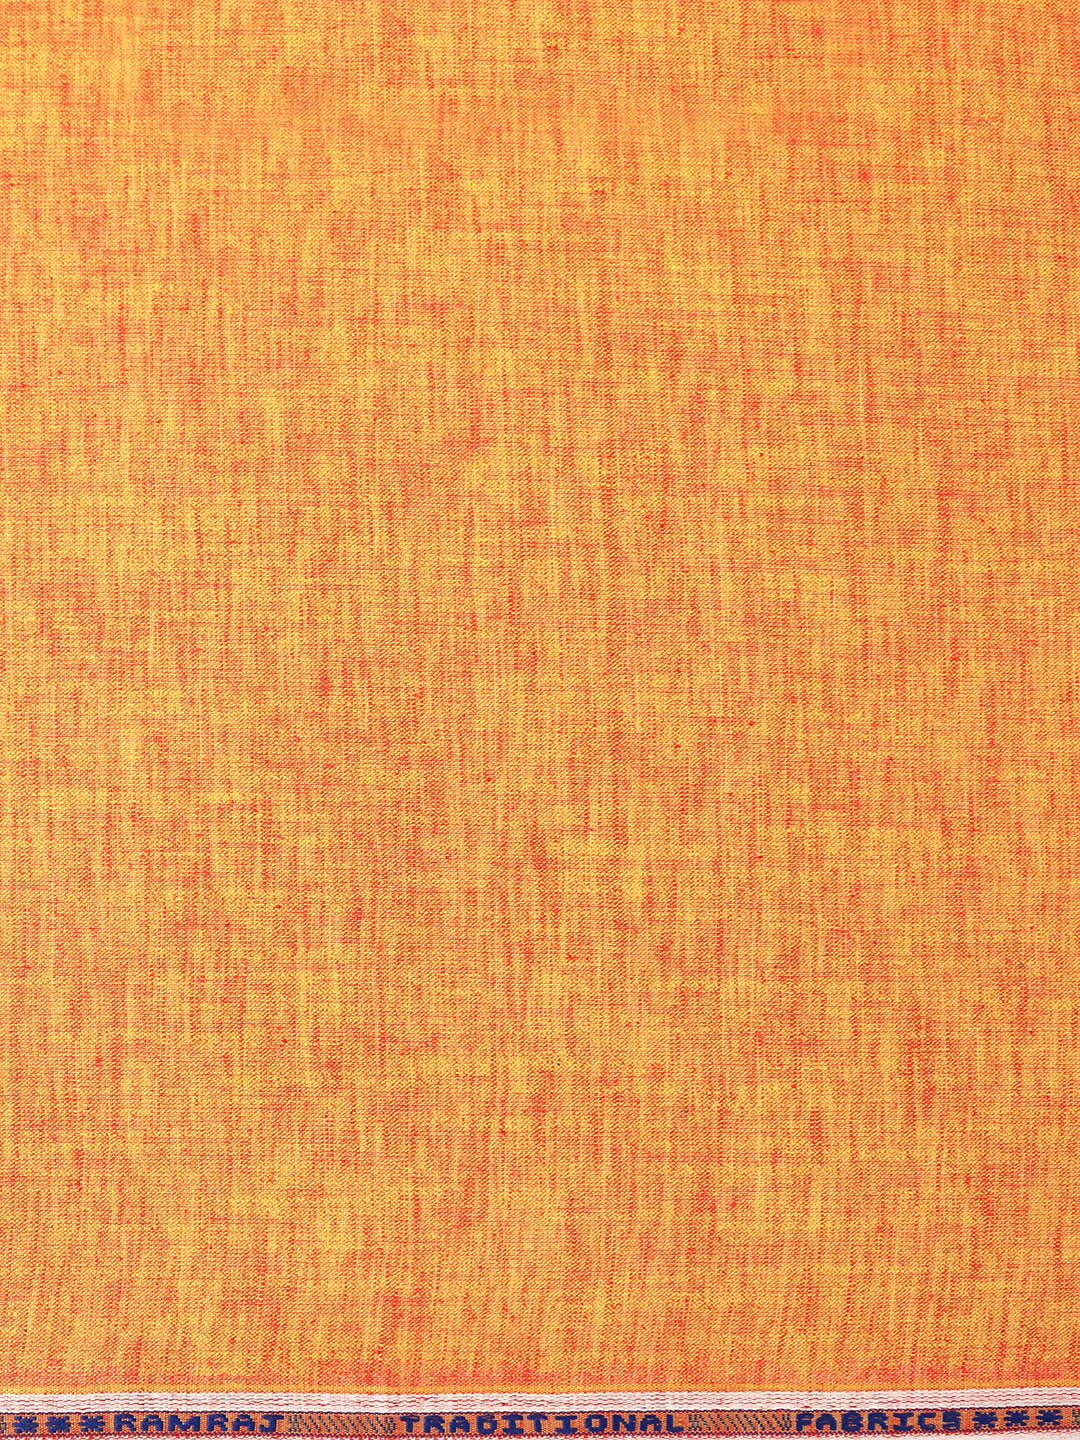 Cotton Blend Orange Colour Kurtha Fabric Lampus - CAPC1160-63